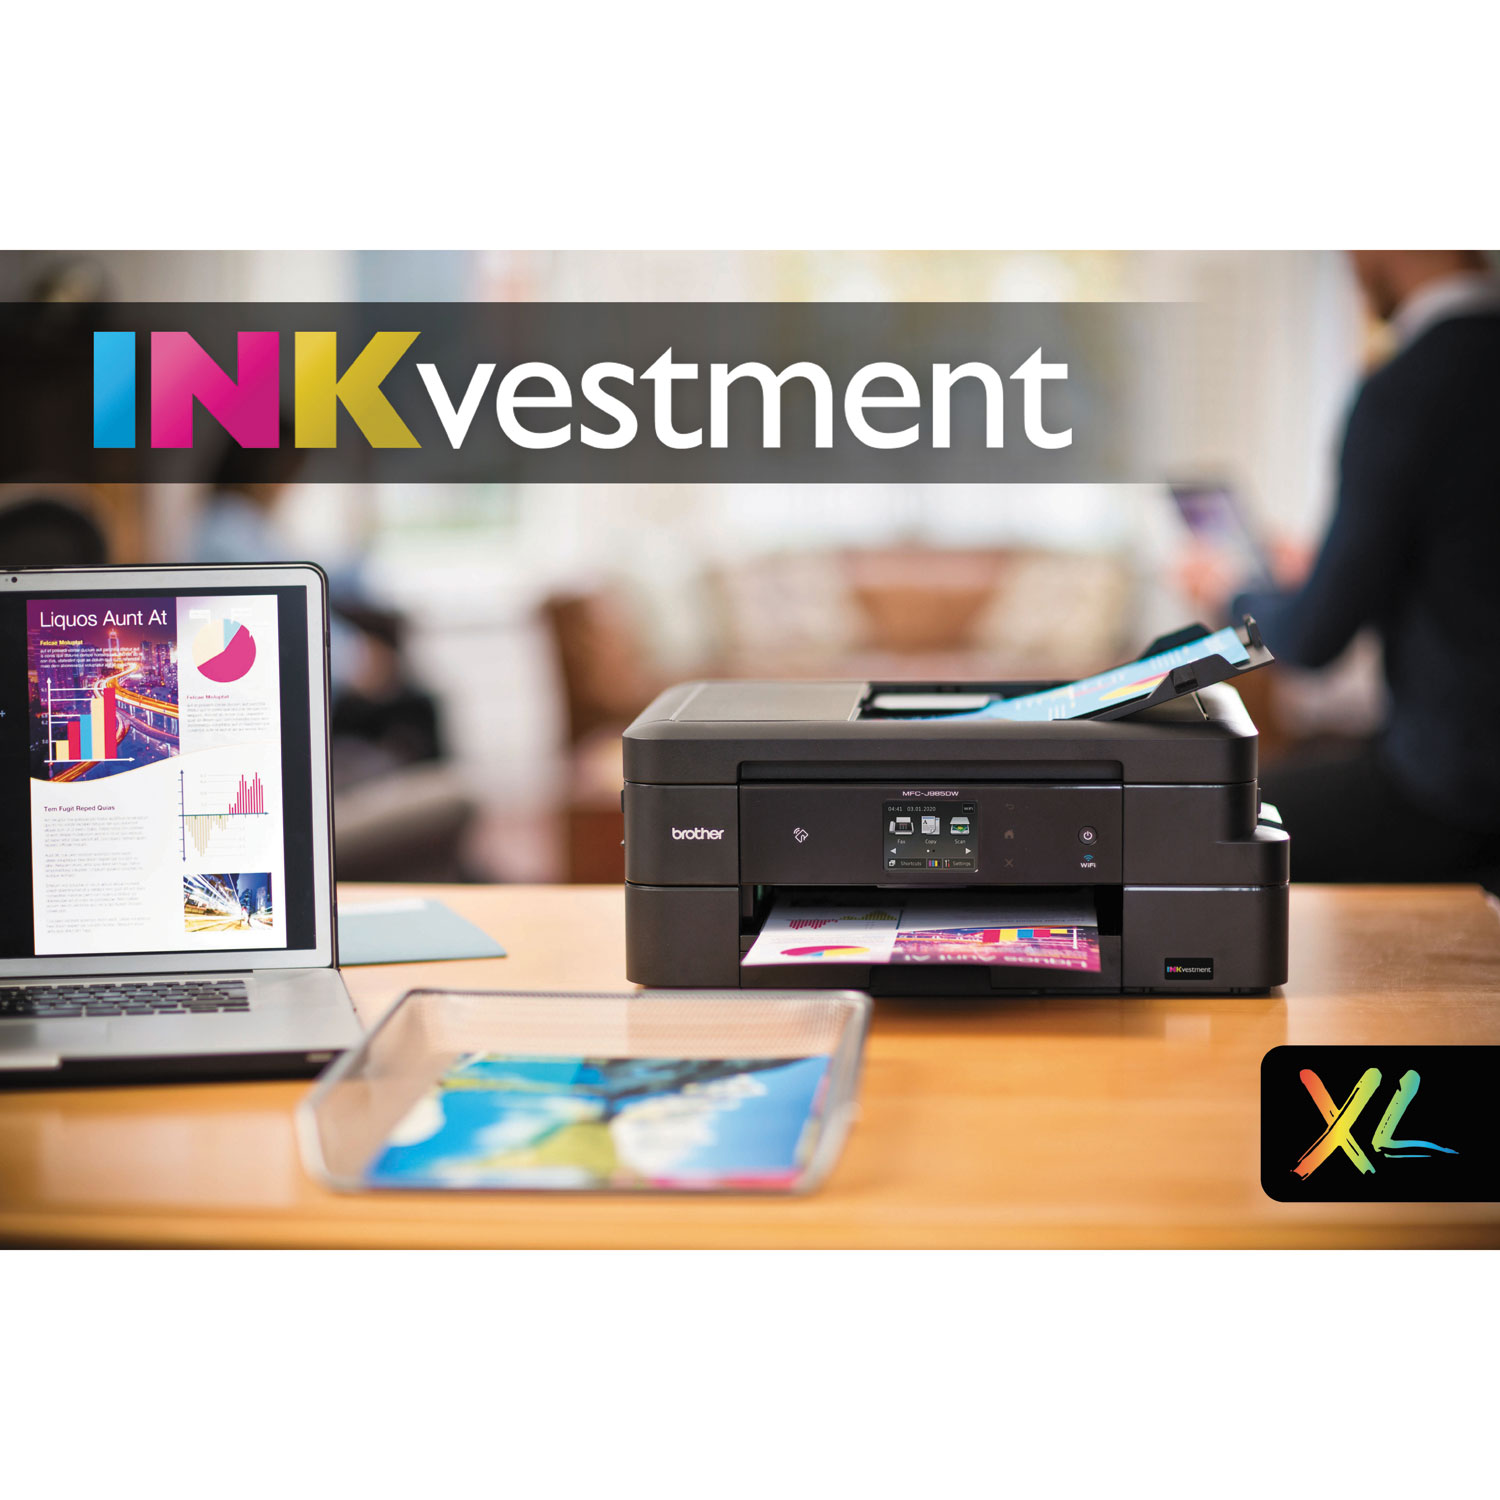 Work Smart MFC-J985DWXL Copy/Fax/Print/Scan, 12 INKvestment Cartridges